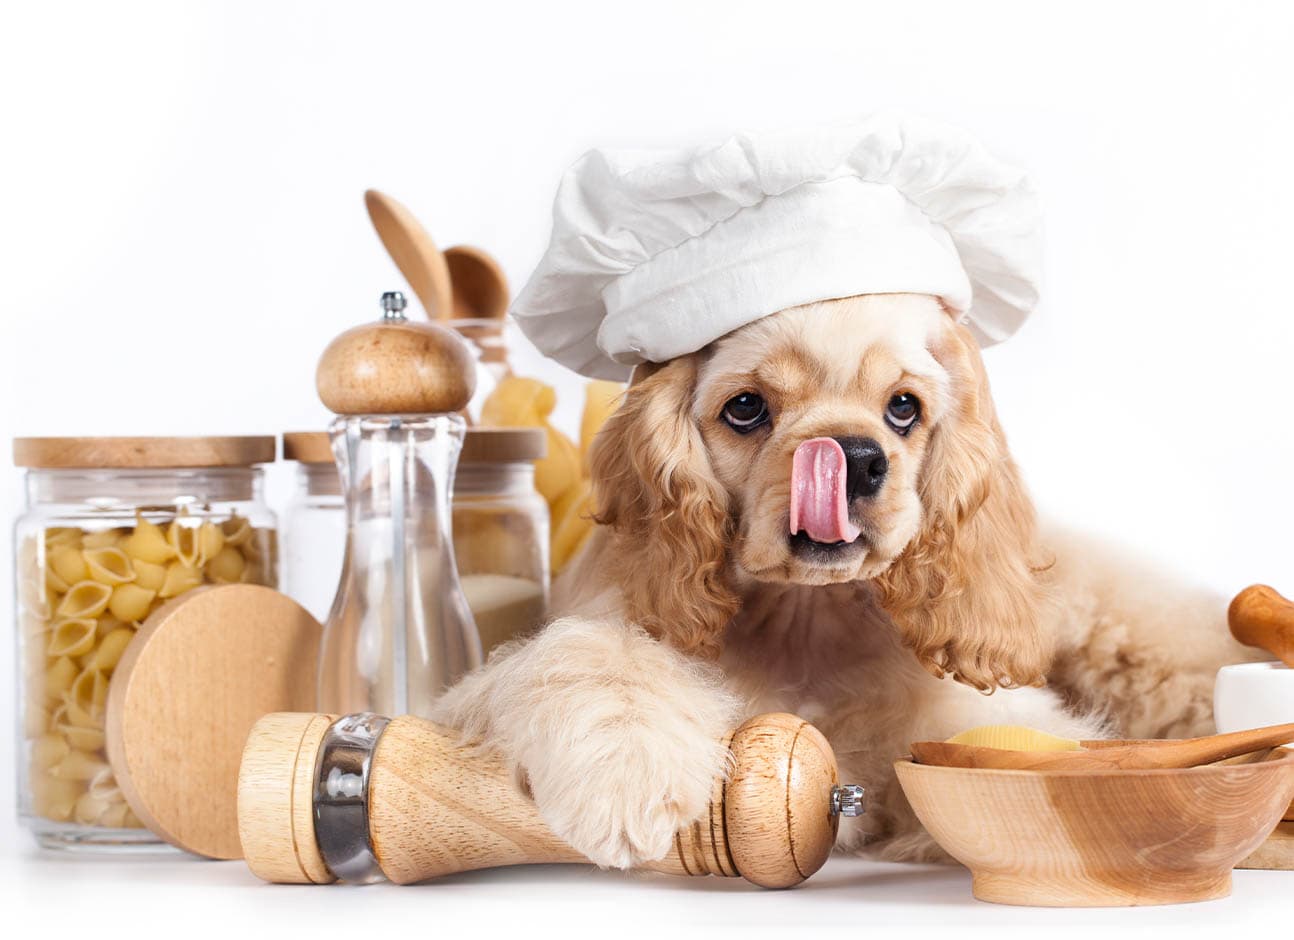 Dog and raw pasta